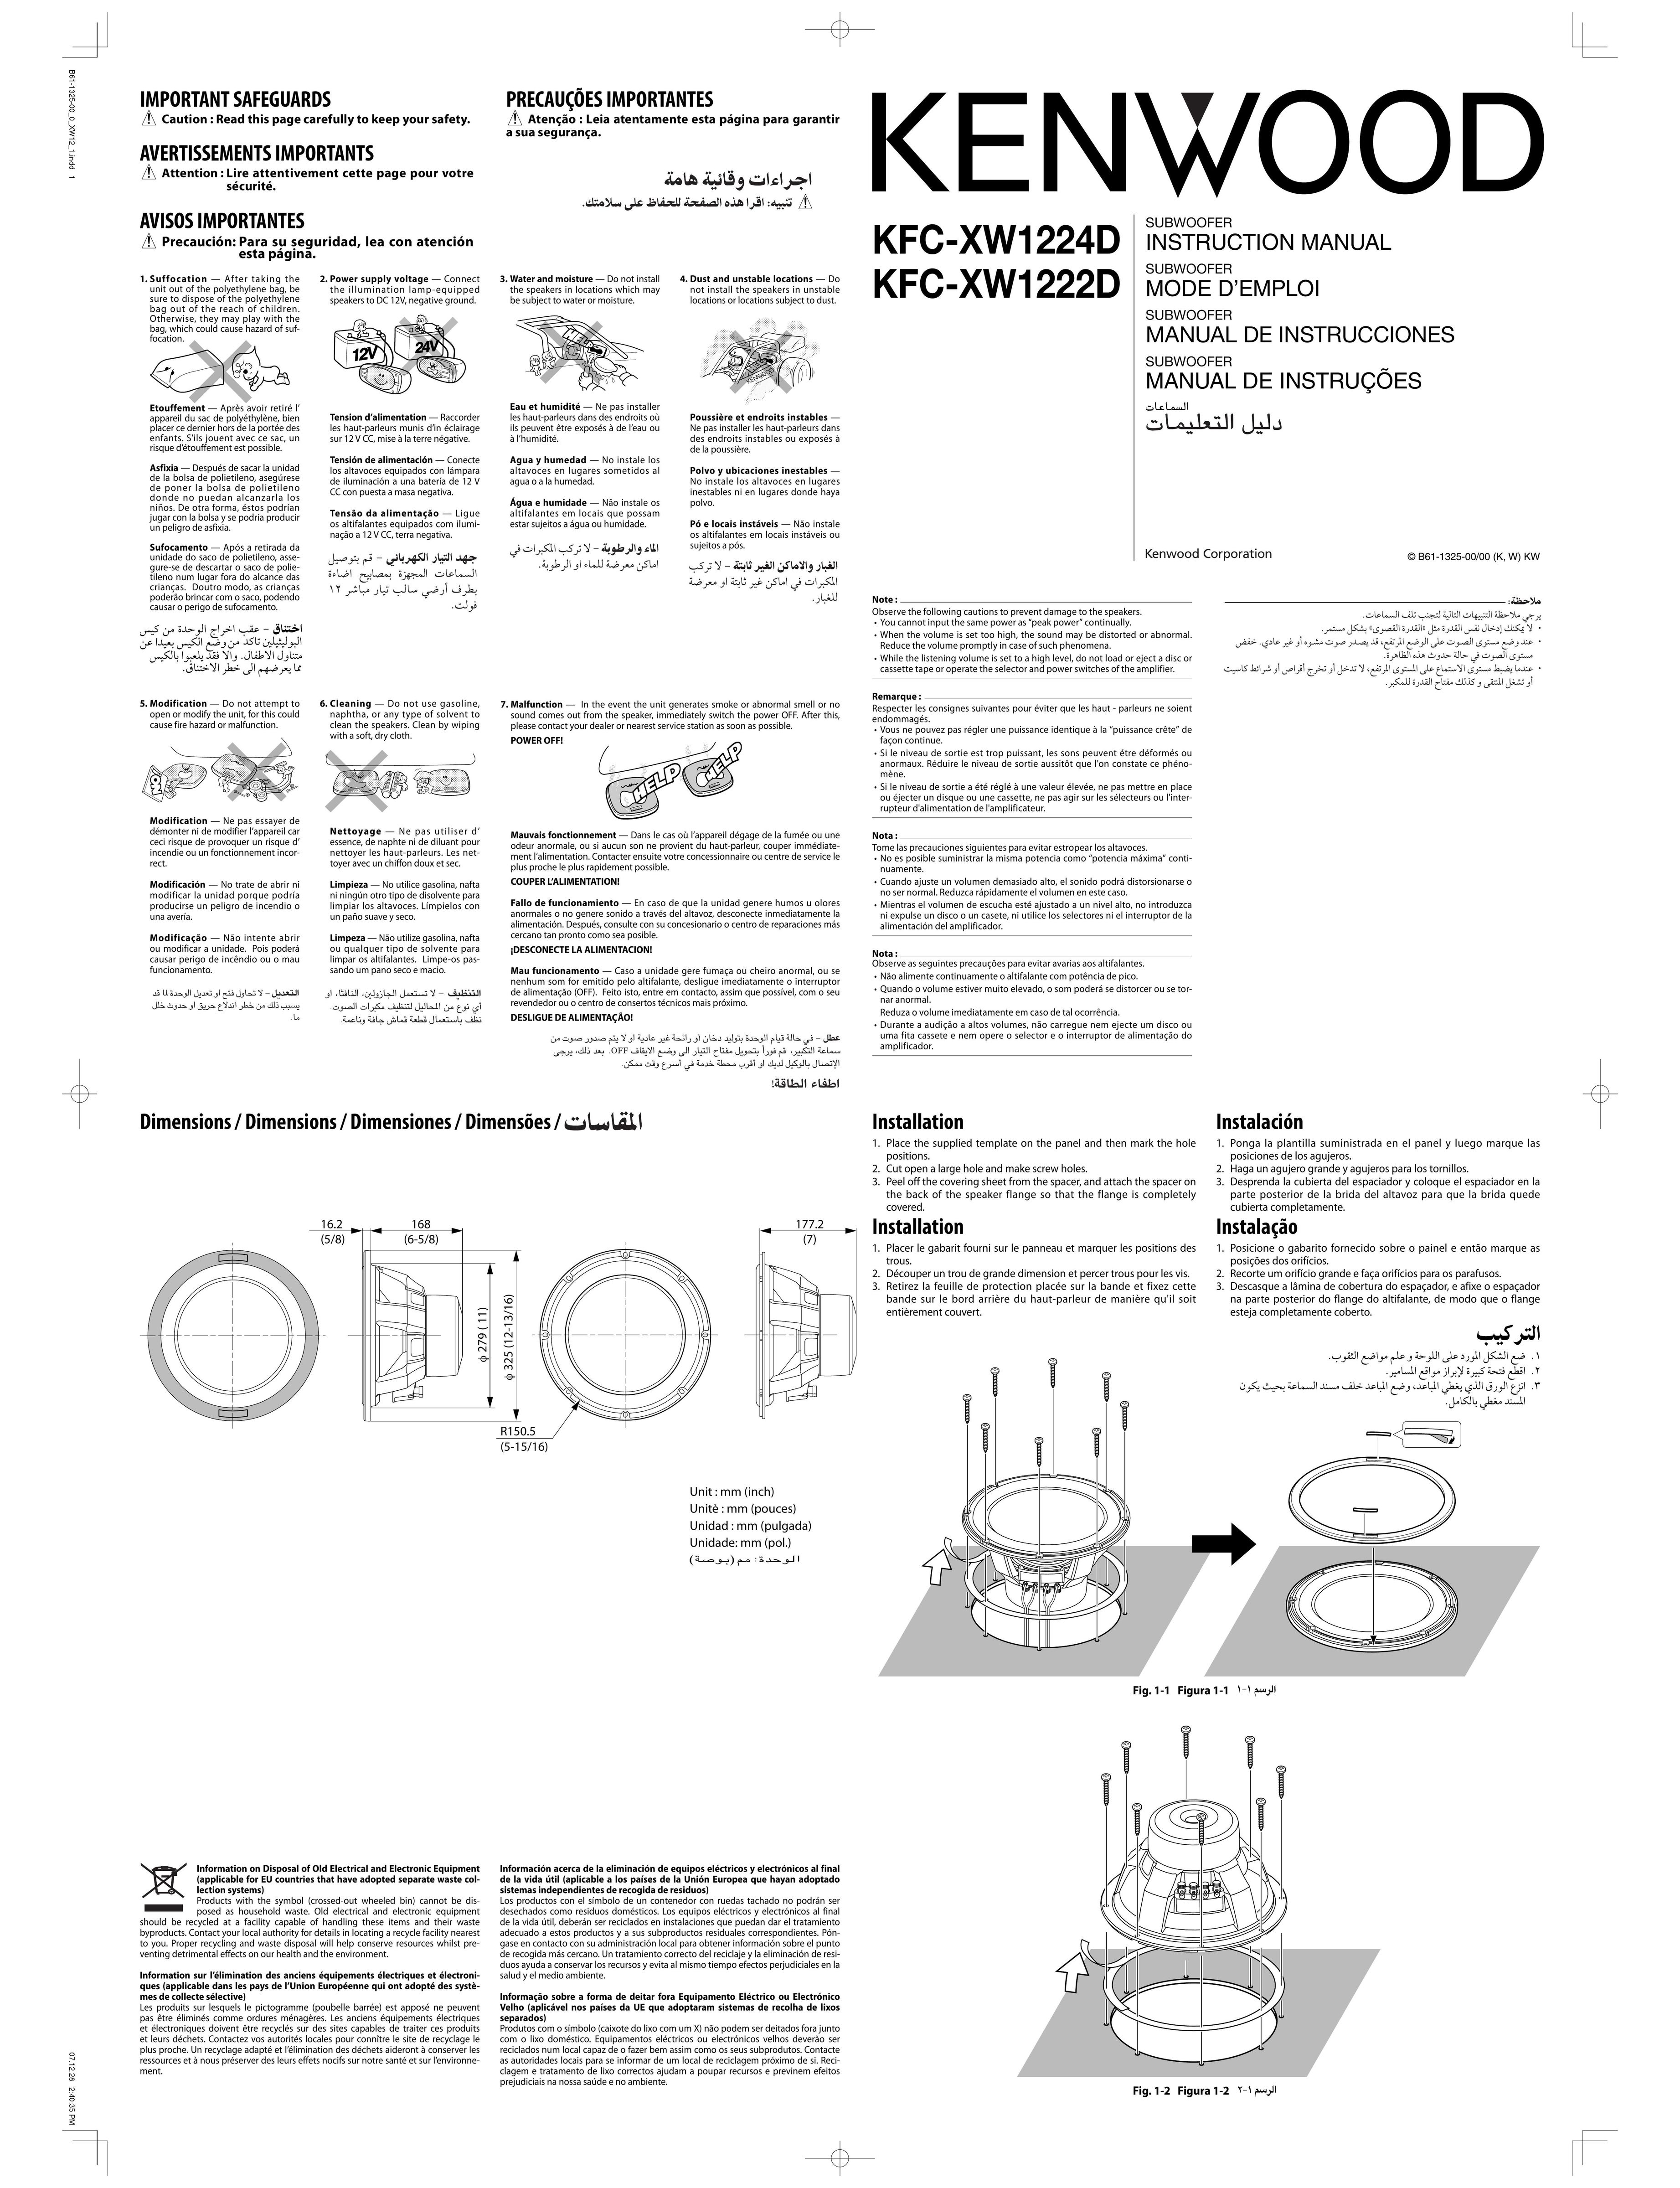 Kenwood KFC-XW1222D Speaker User Manual